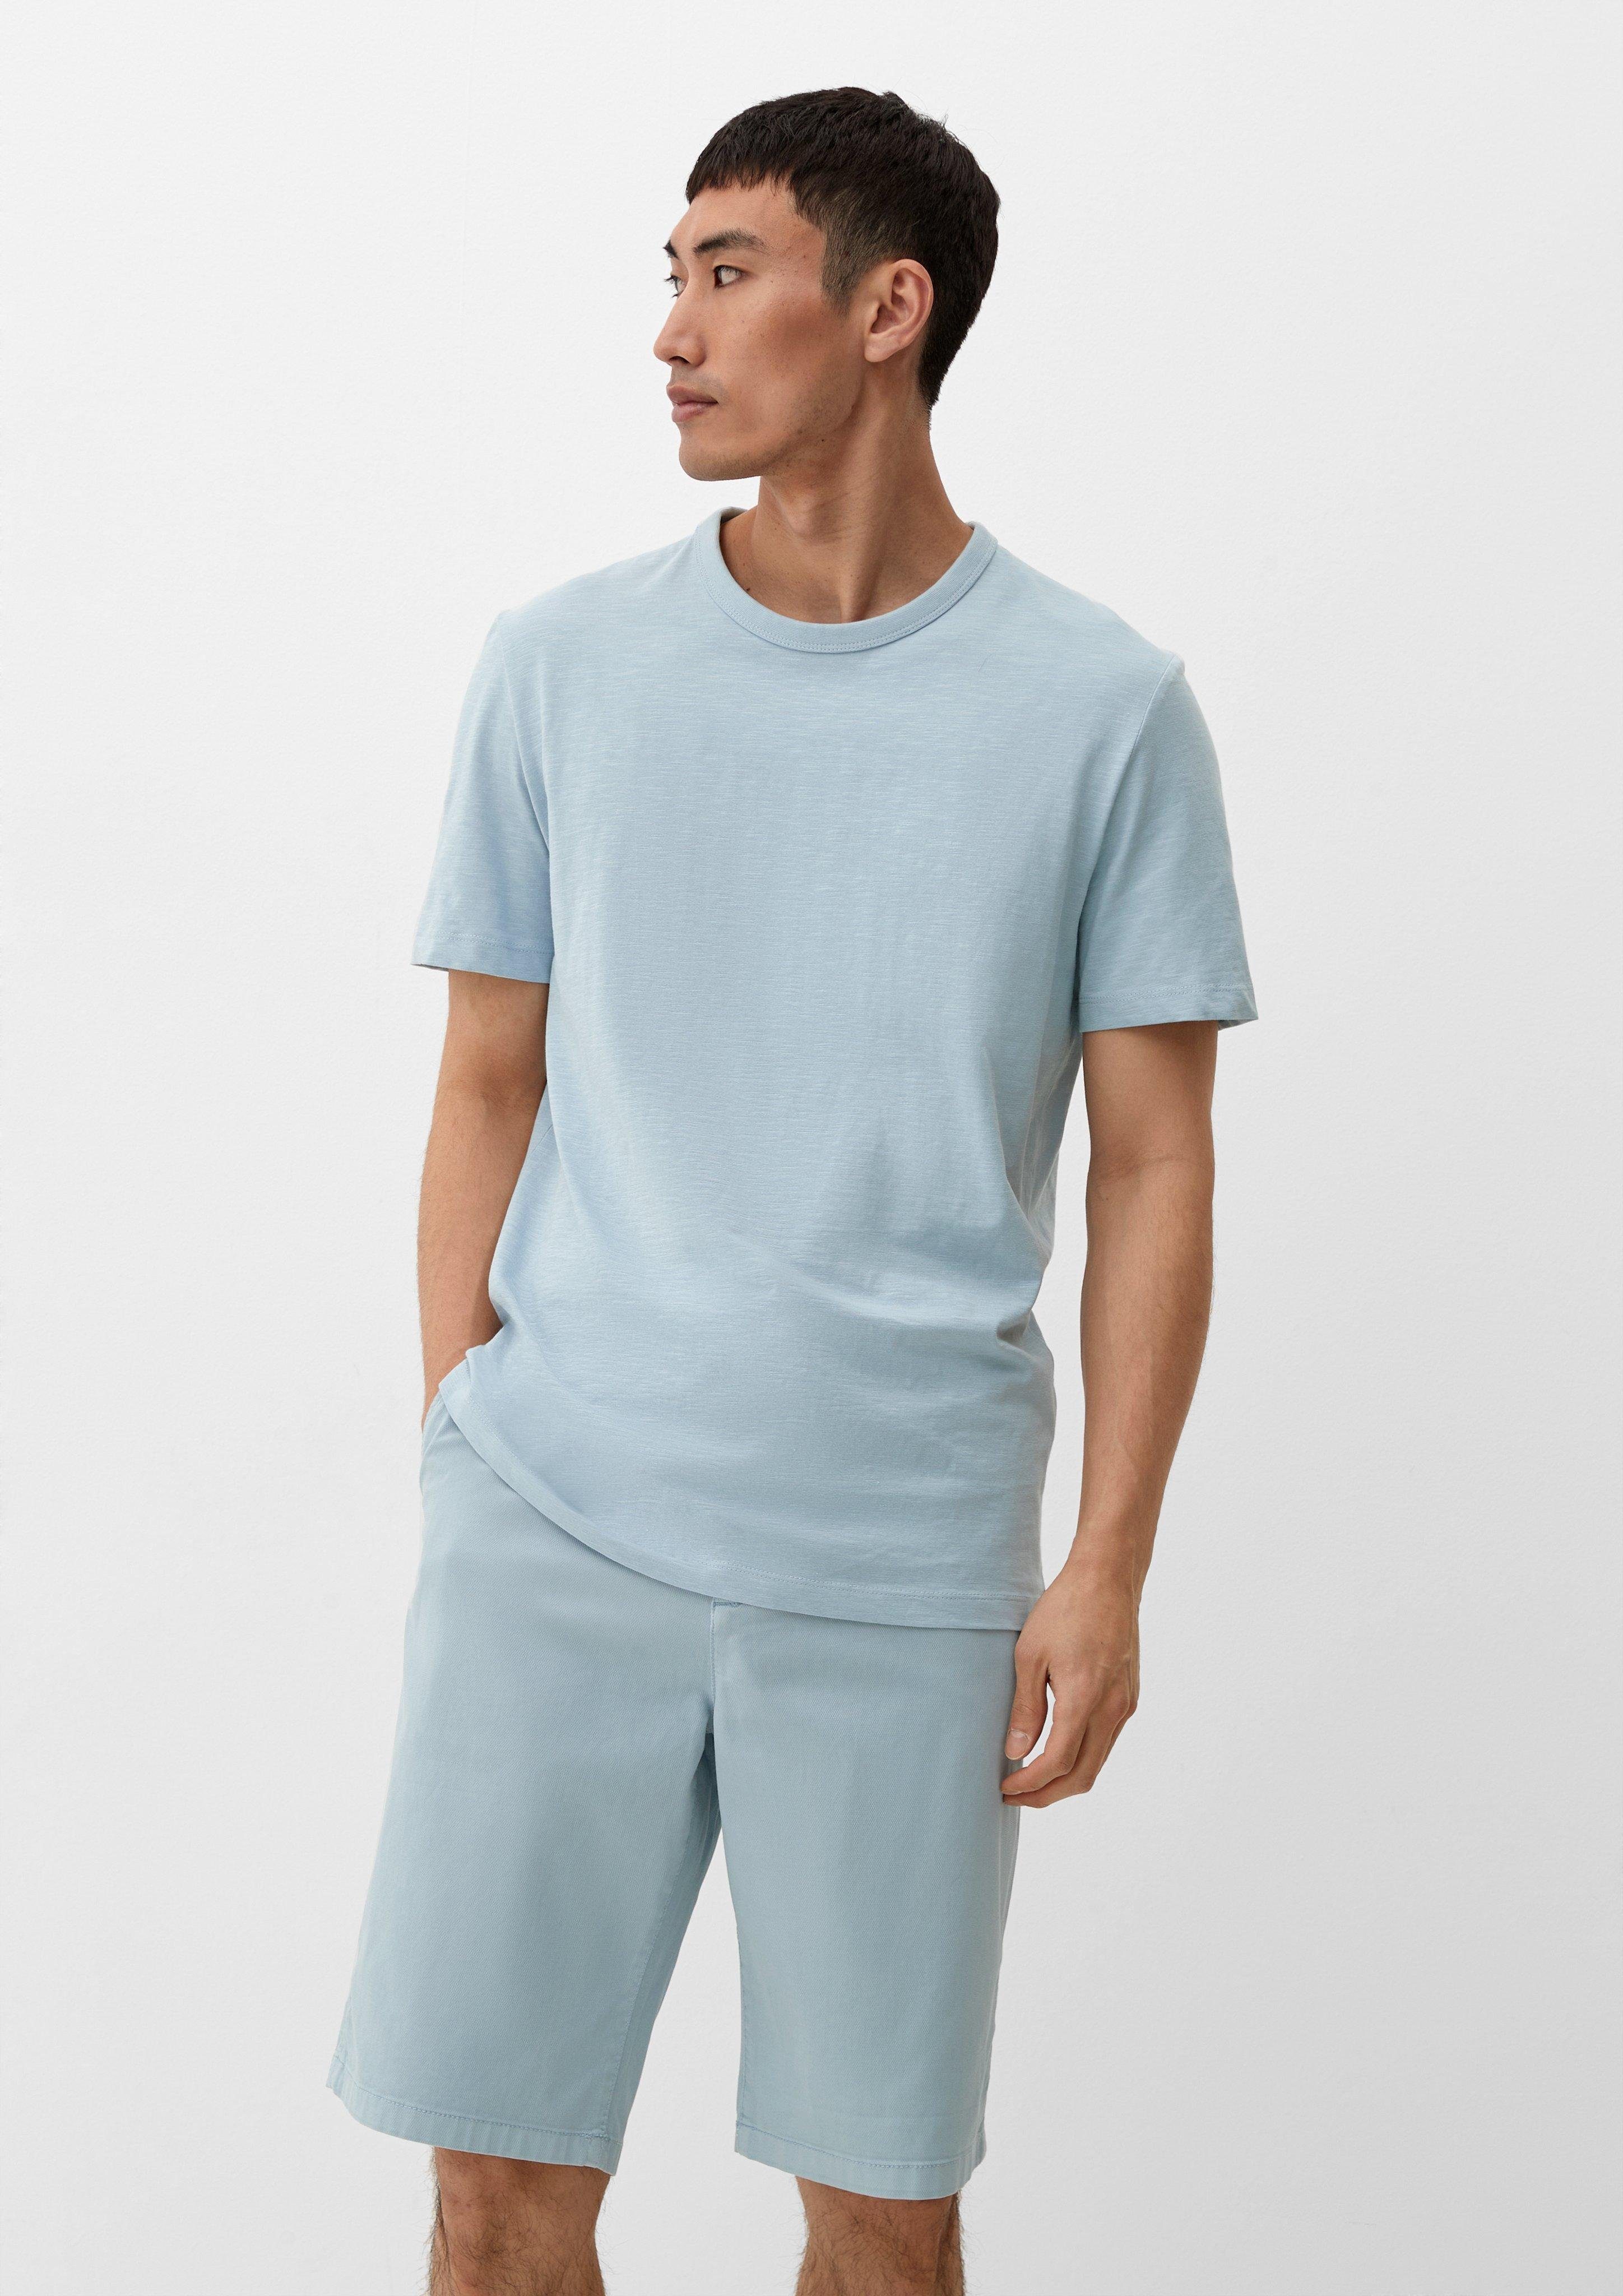 s.Oliver Bermudas hellblau mit Durchzugskordel Relaxed: Dye Bermuda Garment